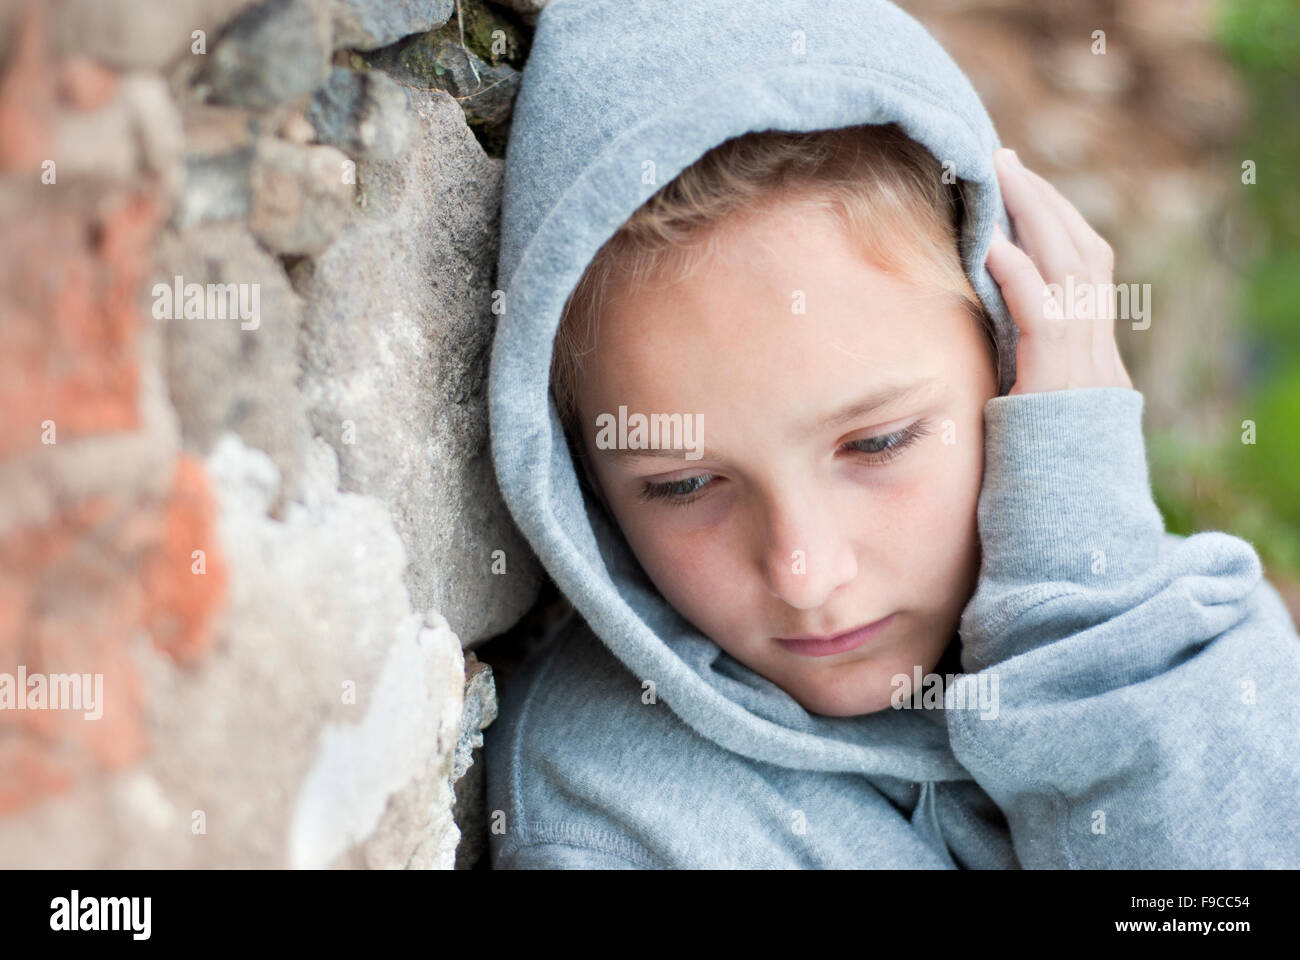 Little sad child with hoody. Stock Photo